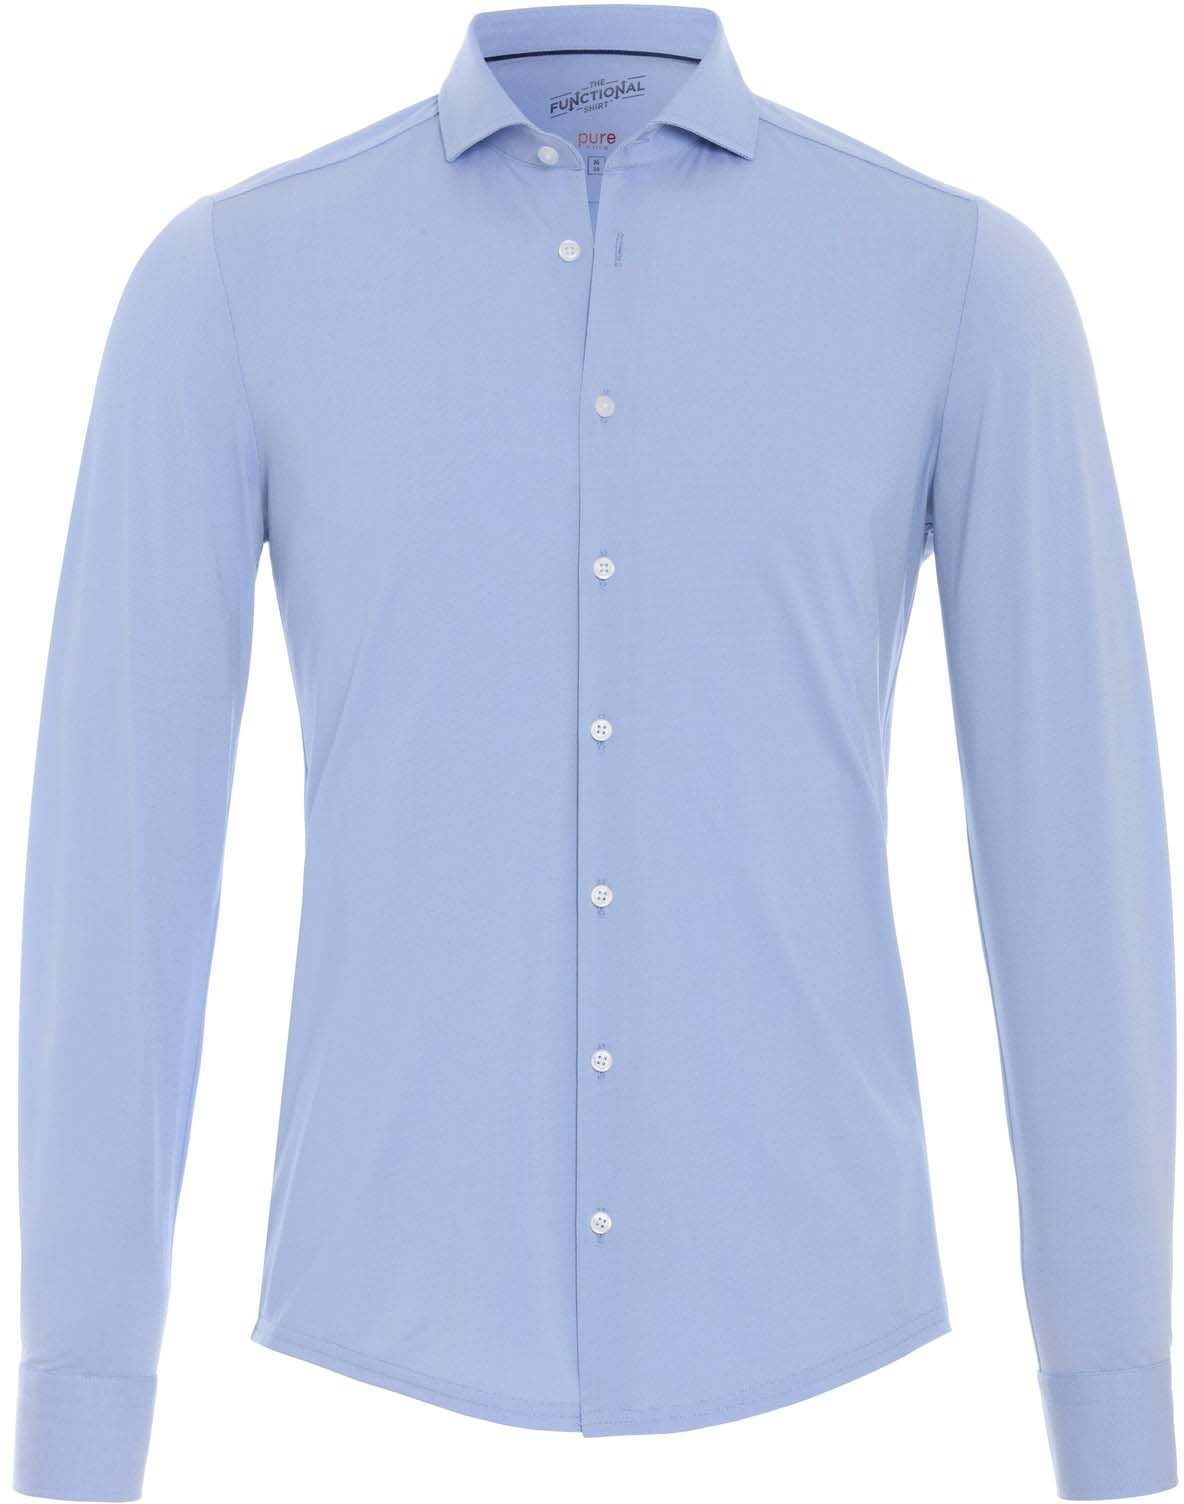 Pure Functional Shirt Lightblue Blue size 15